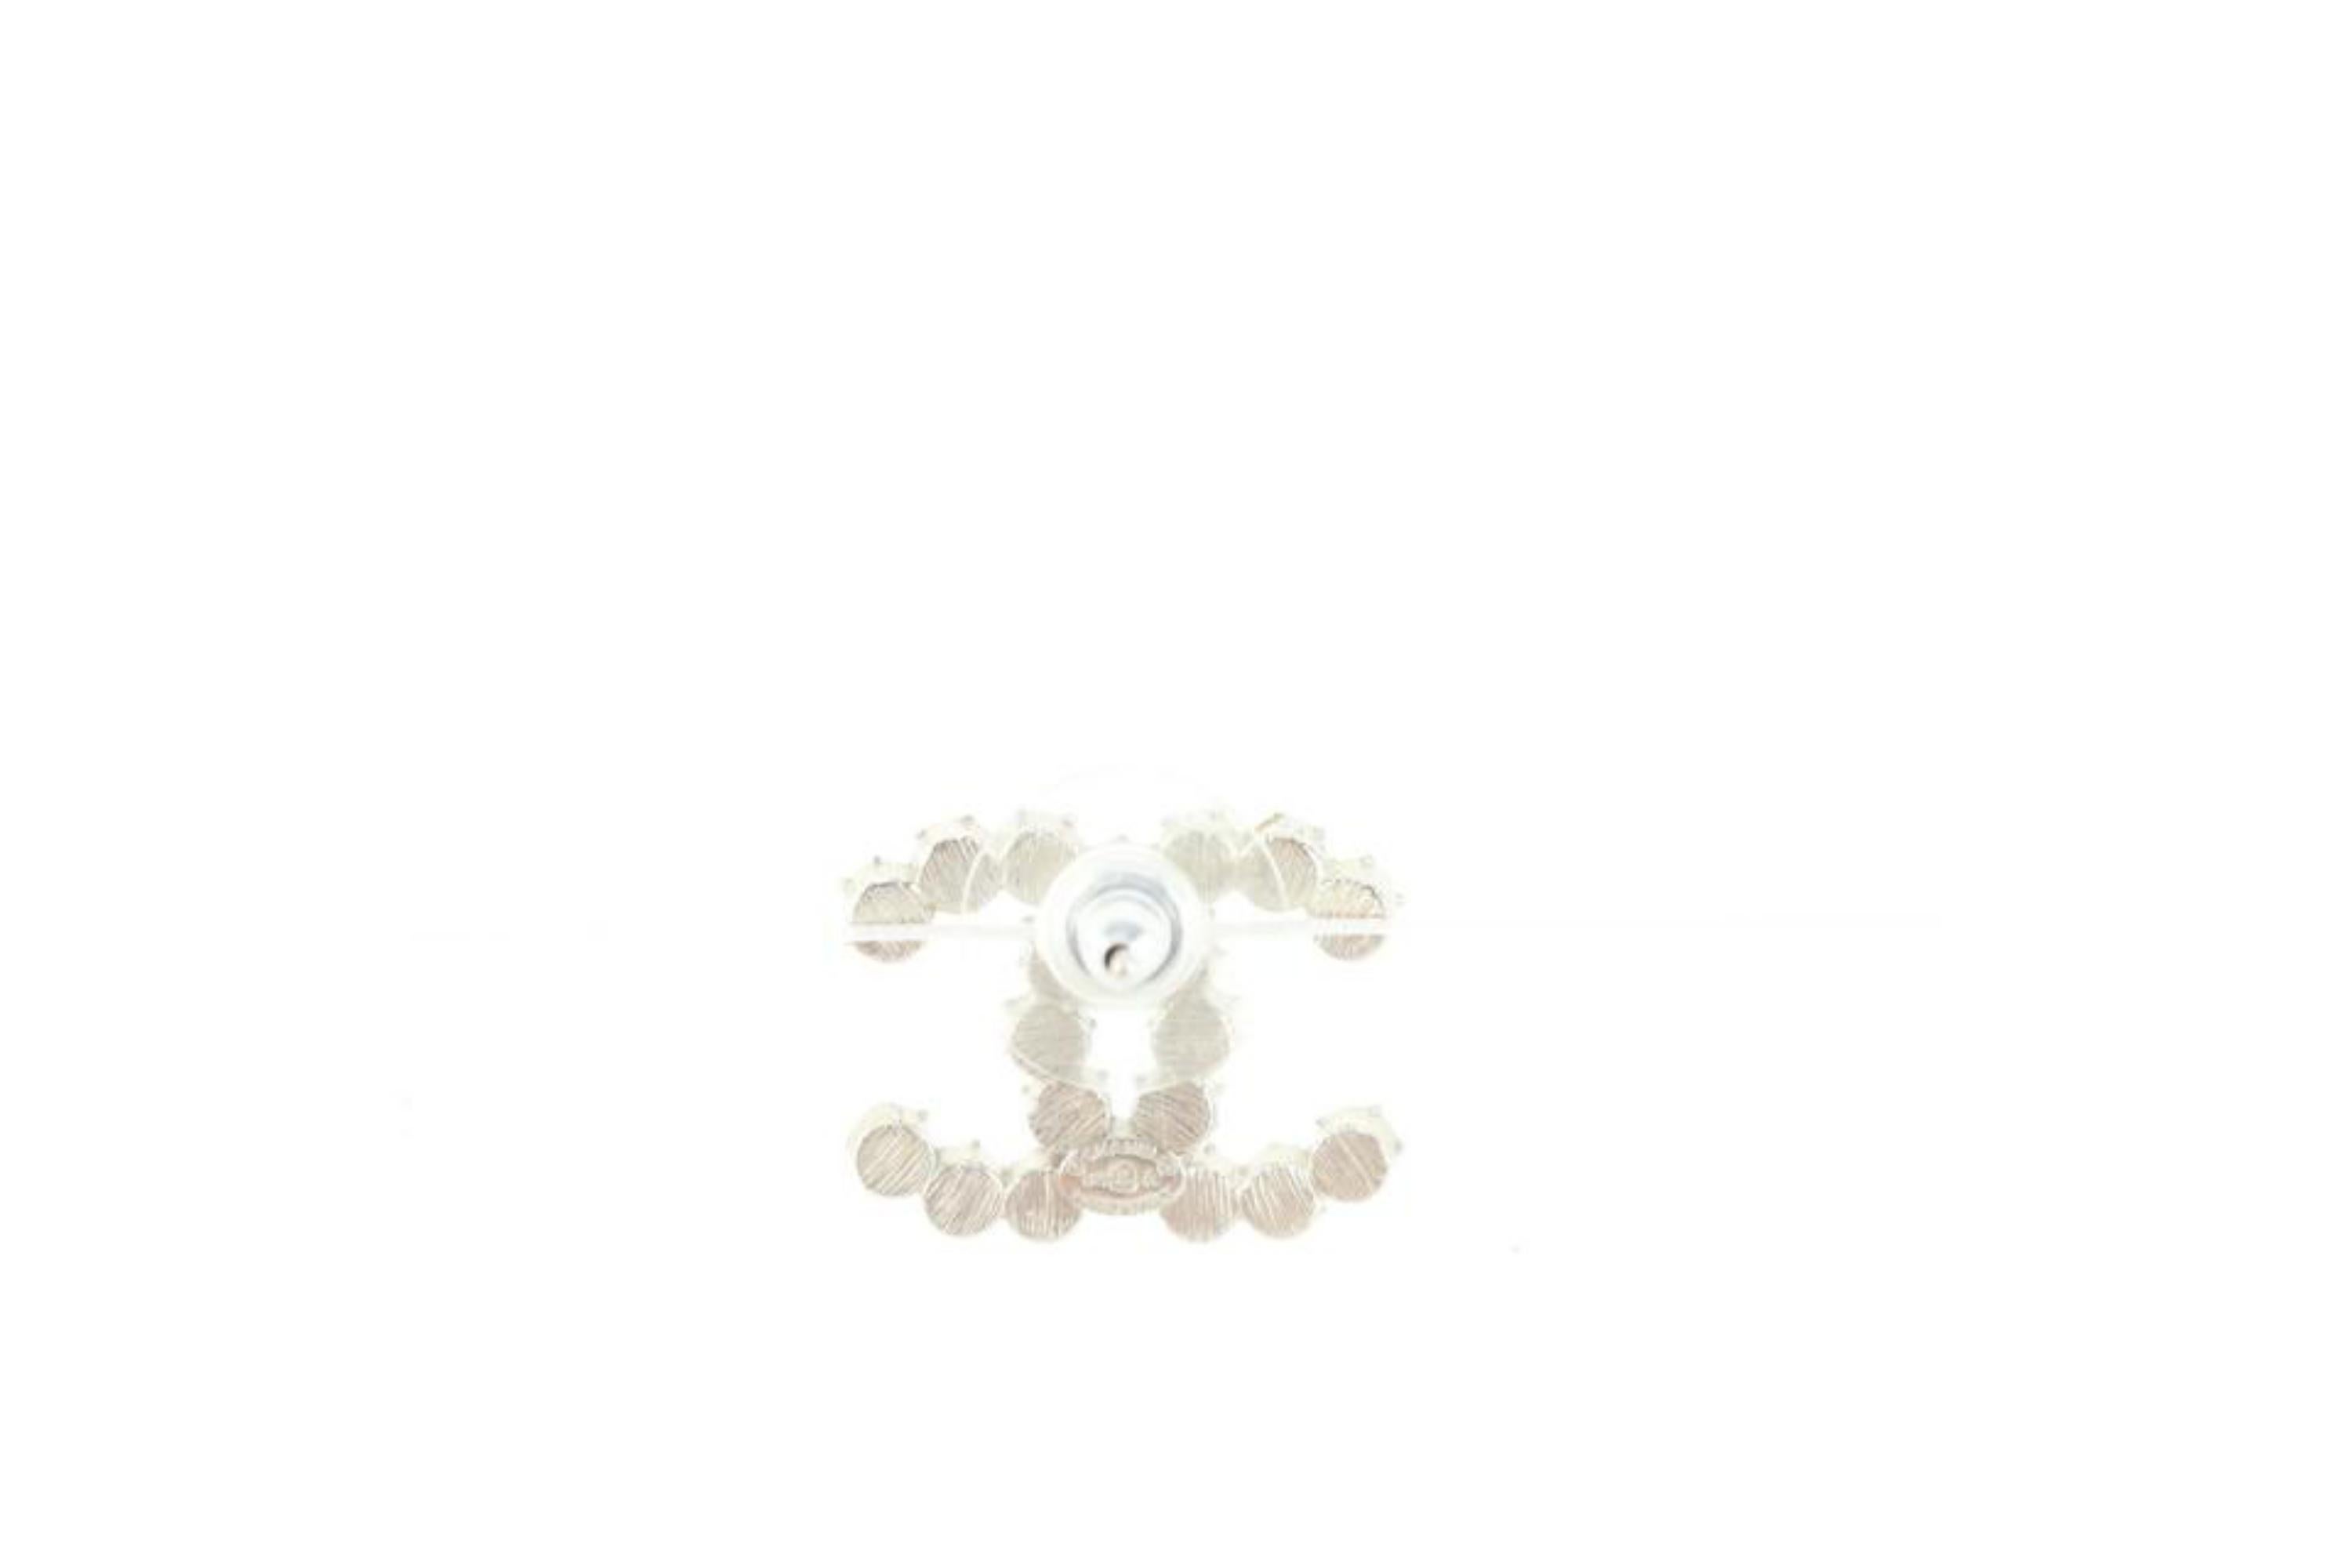 Chanel B15a Crystal CC Pierce Single Earring 29ck62s 3